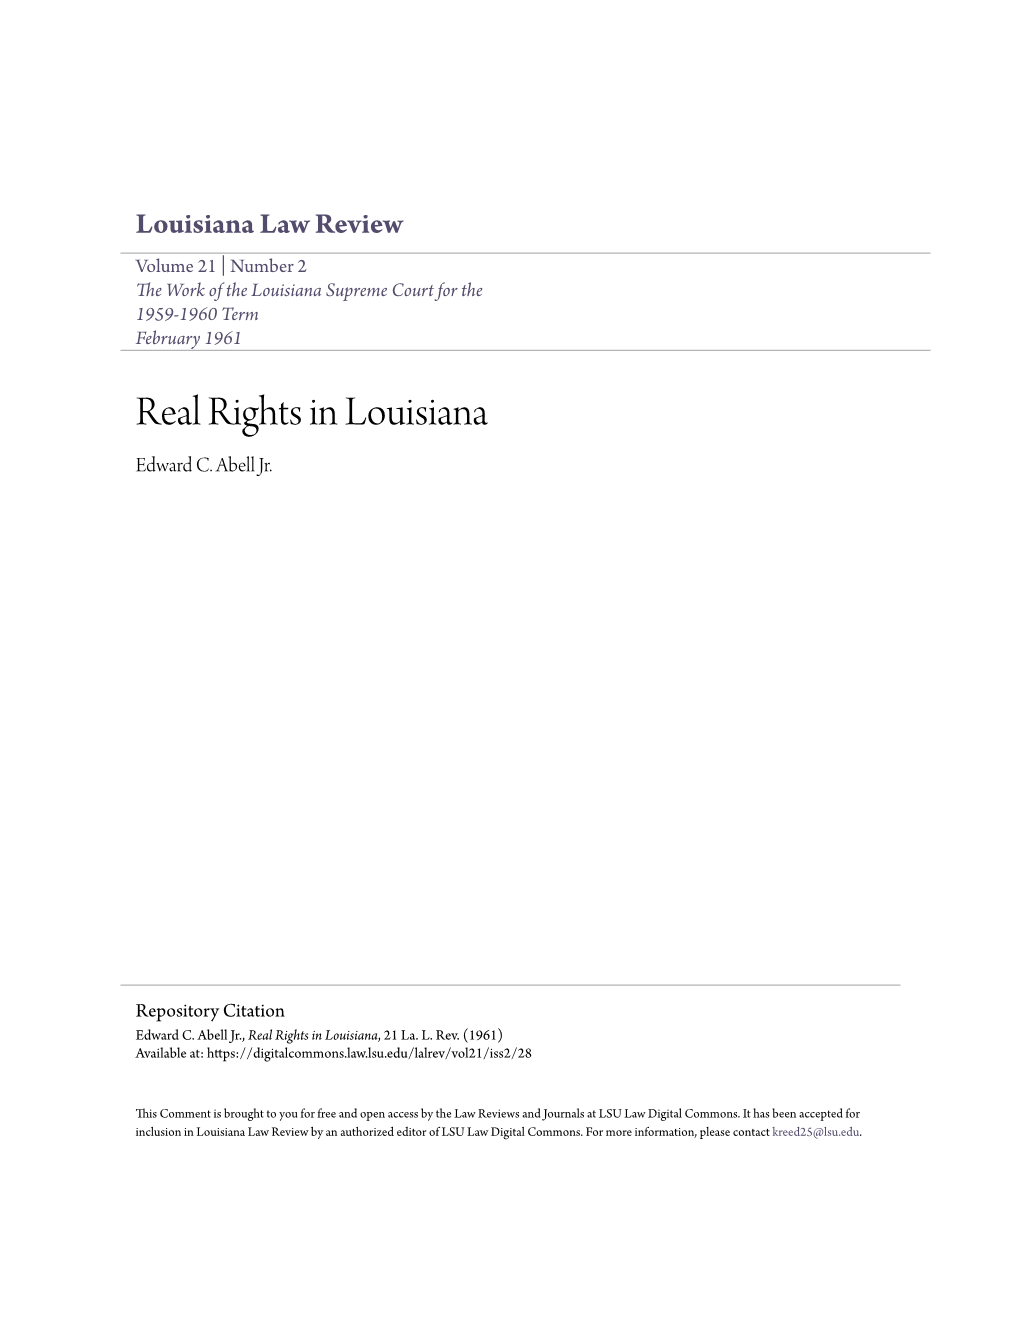 Real Rights in Louisiana Edward C